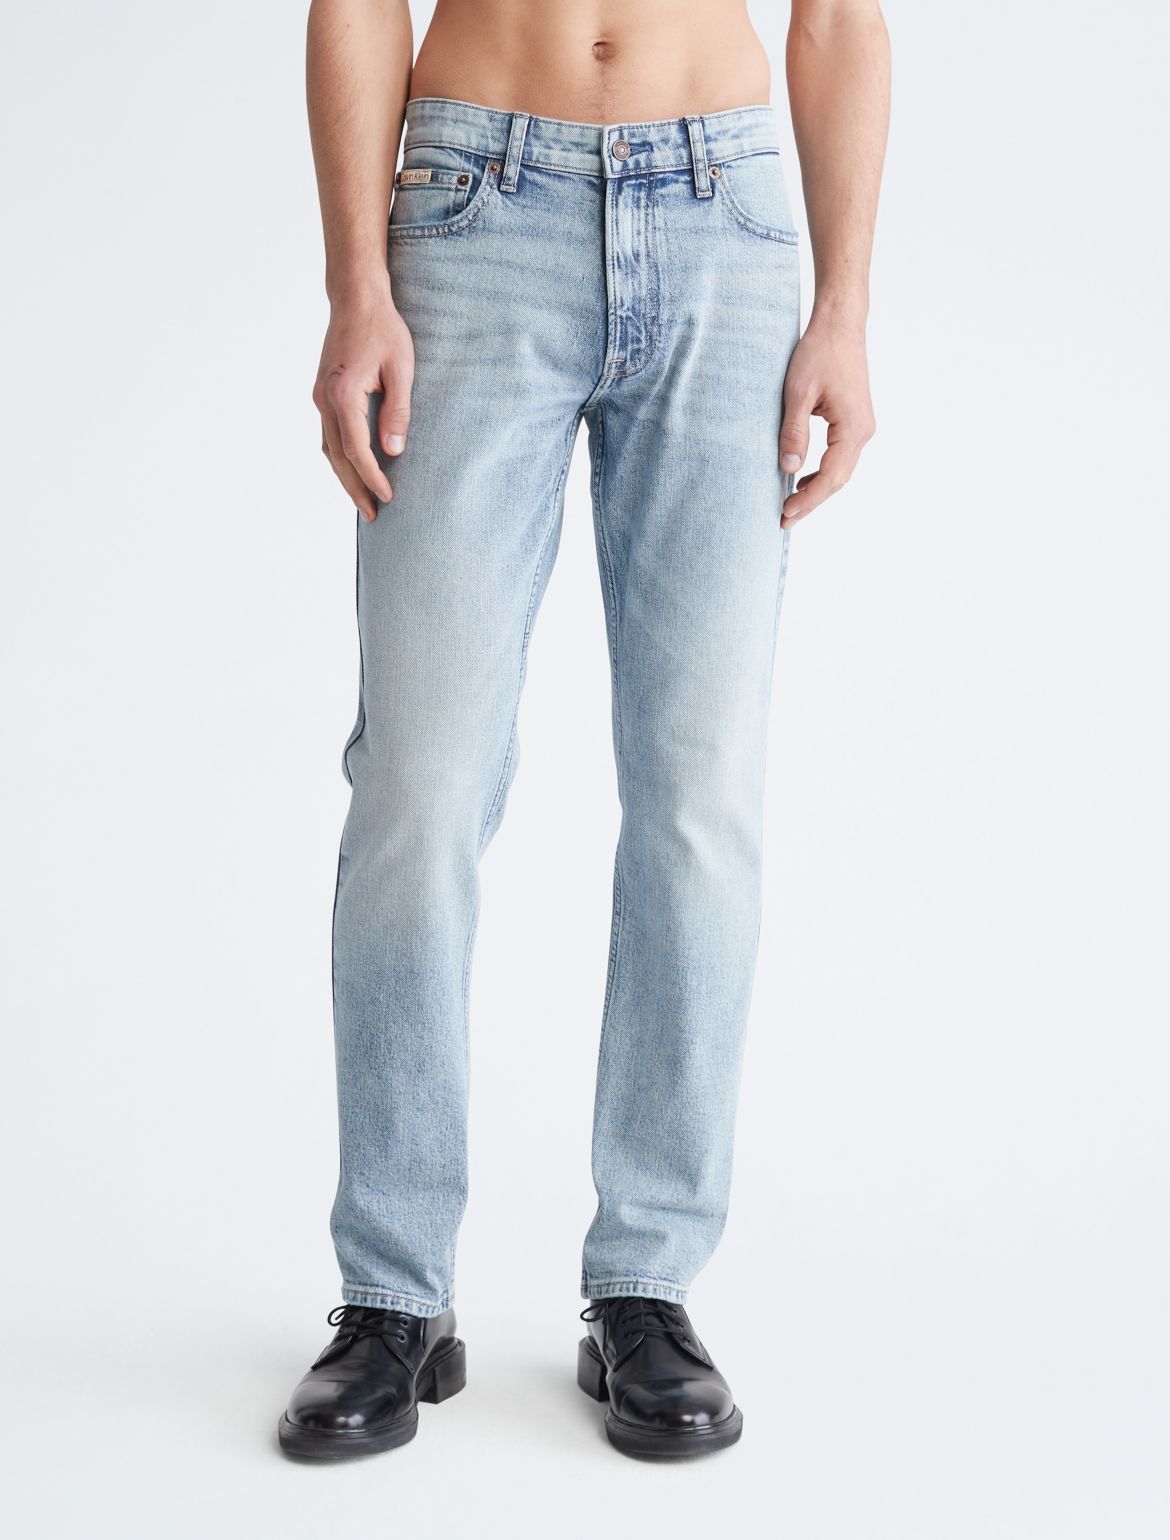 Calvin Klein Men's Slim Fit Jean - Blue - 34W x 30L